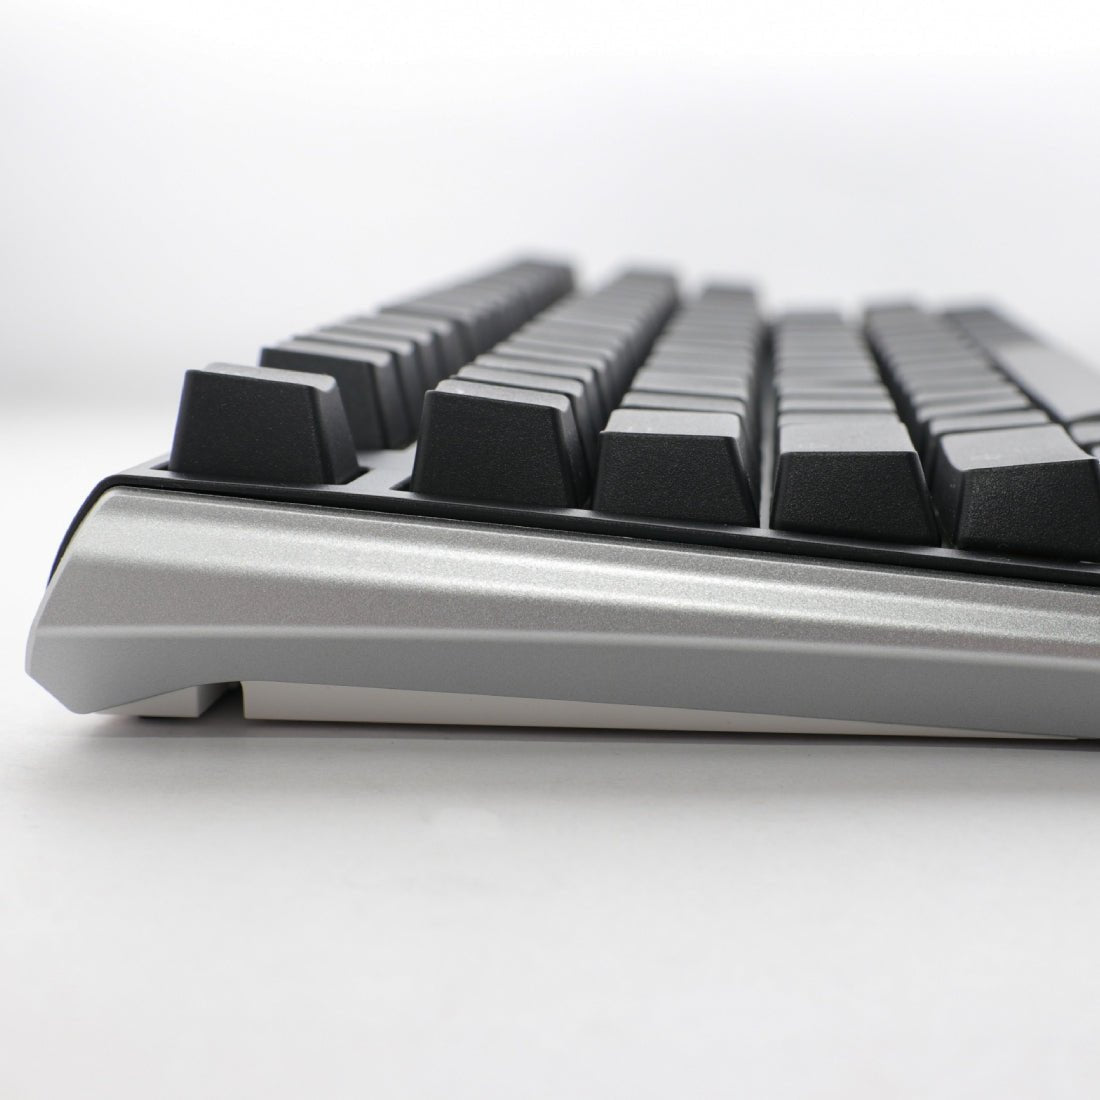 Ducky One 3 TKL Classic Mini 60% RGB Mechanical Keyboard - Cherry Red - Store 974 | ستور ٩٧٤